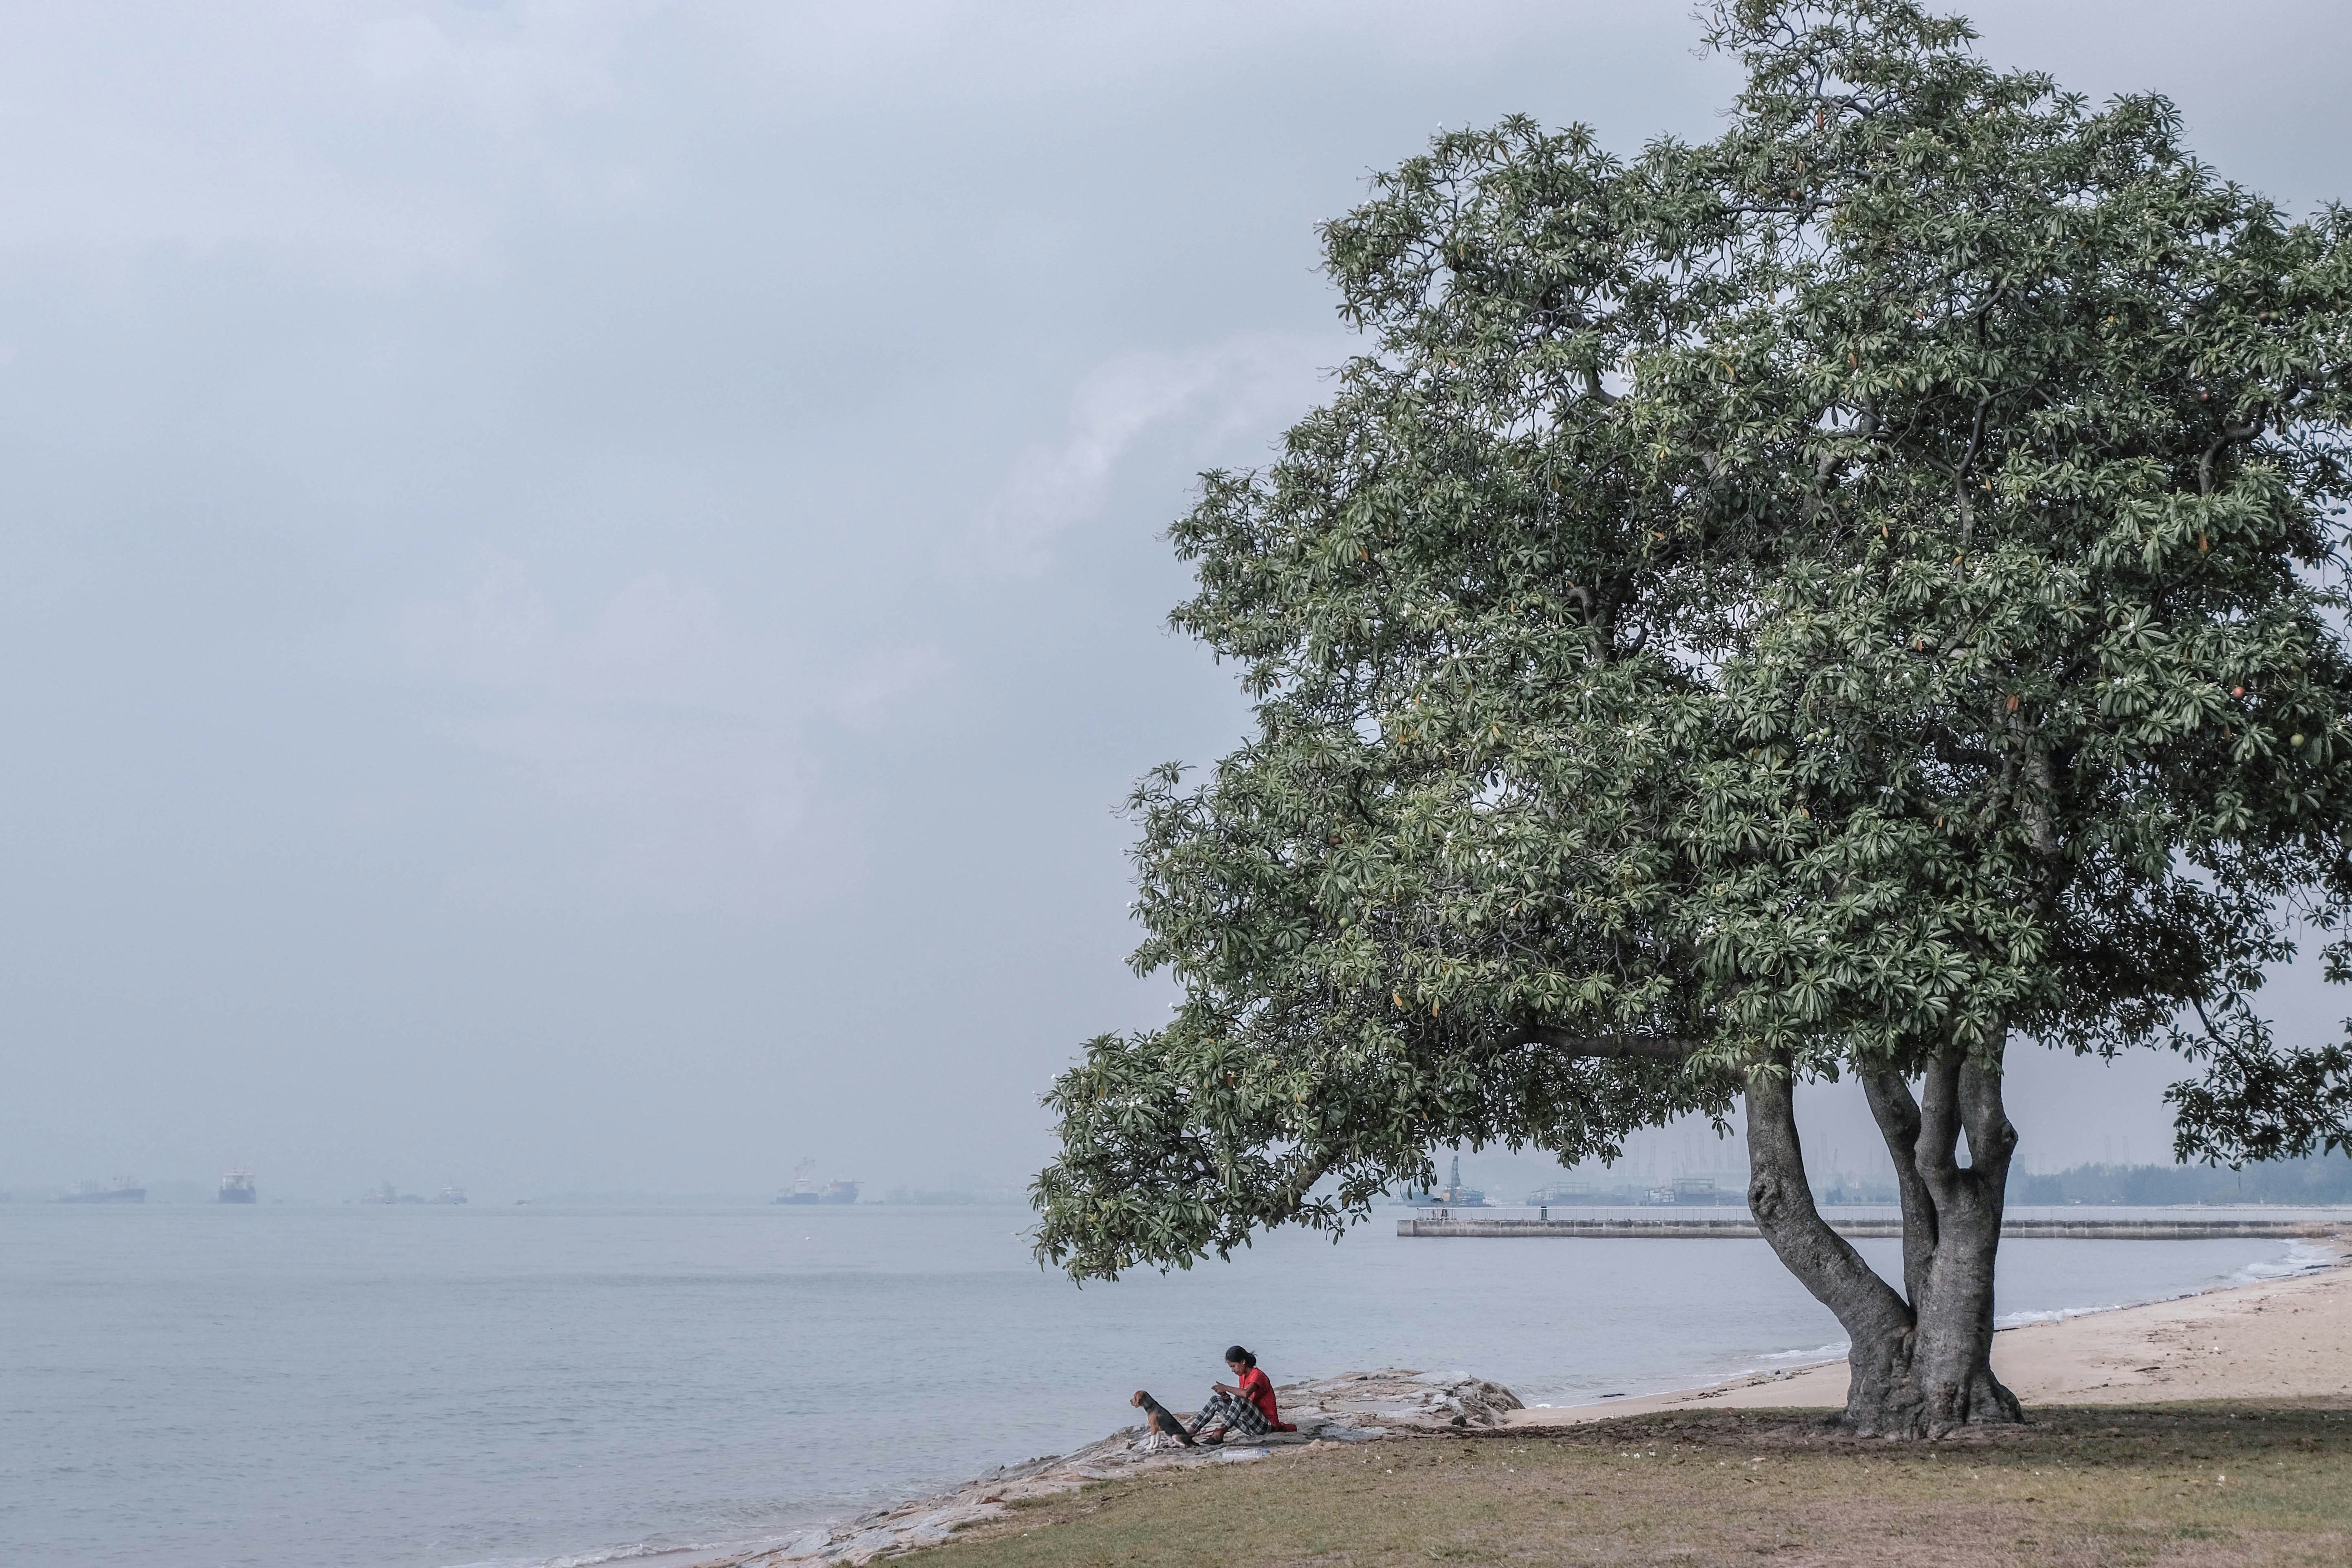 Seeking Seasides #Singapore #eastcoast #park #miniature #minimal #softlight #tree #beach #explore #haze #greenery #dog #rest